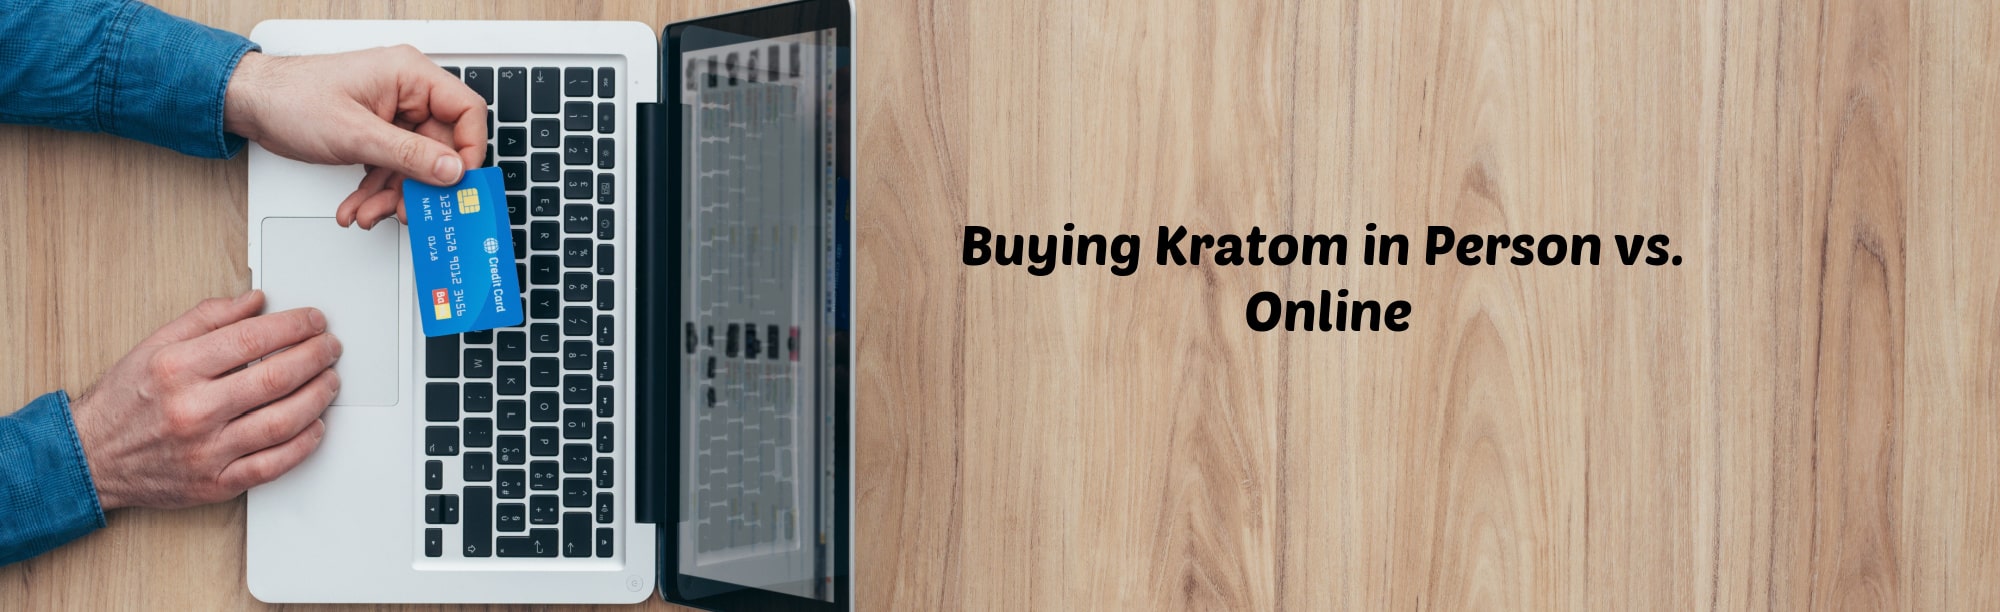 image of buying kratom in person vs online